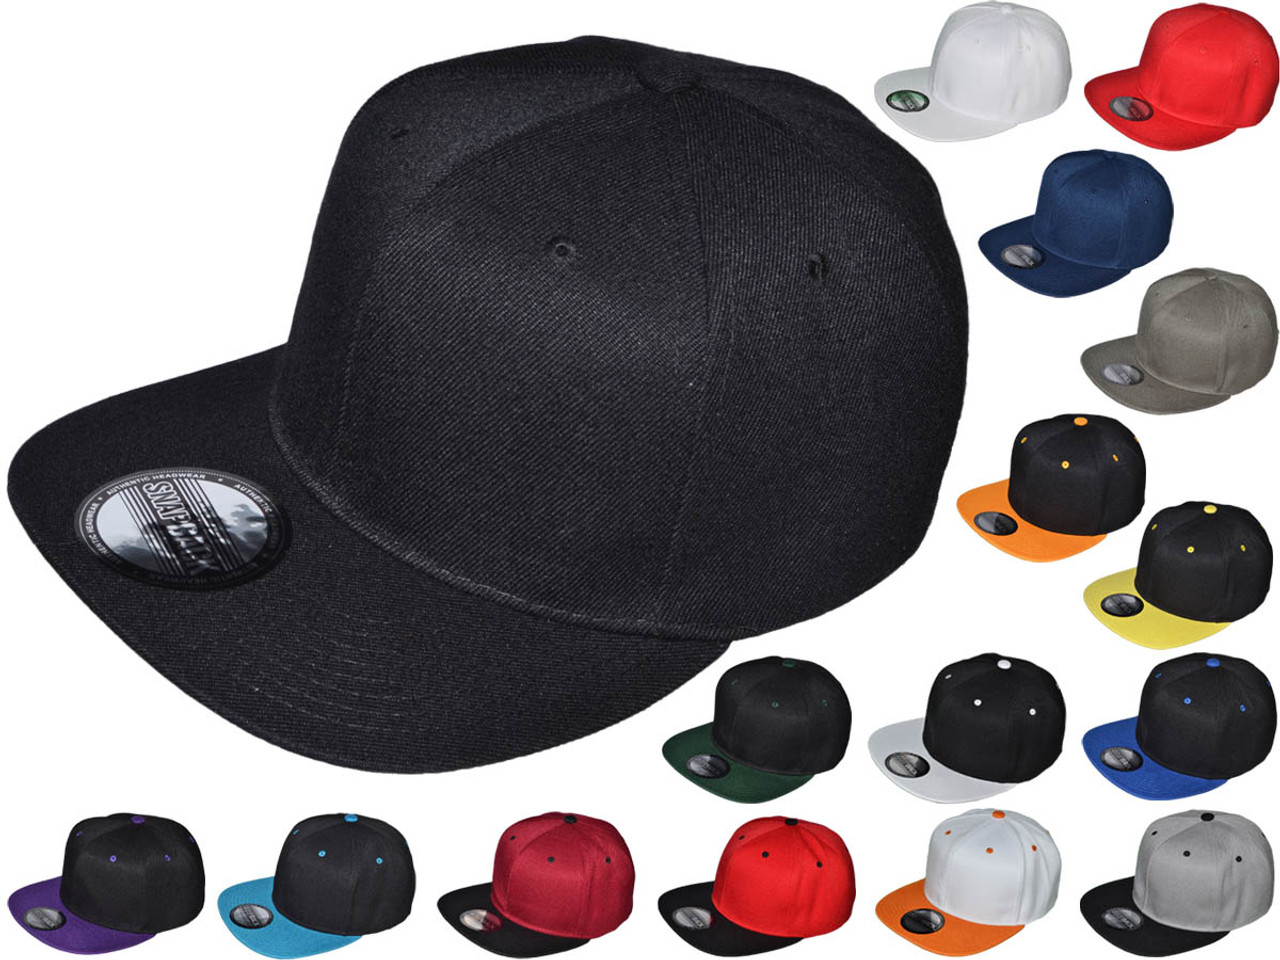 https://cdn11.bigcommerce.com/s-qhlg41l/images/stencil/1280x1280/products/5340/35266/wholesale-blank-snapback-hats-cheap-GJKSN-black-all-colors__82557.1618592254.jpg?c=2